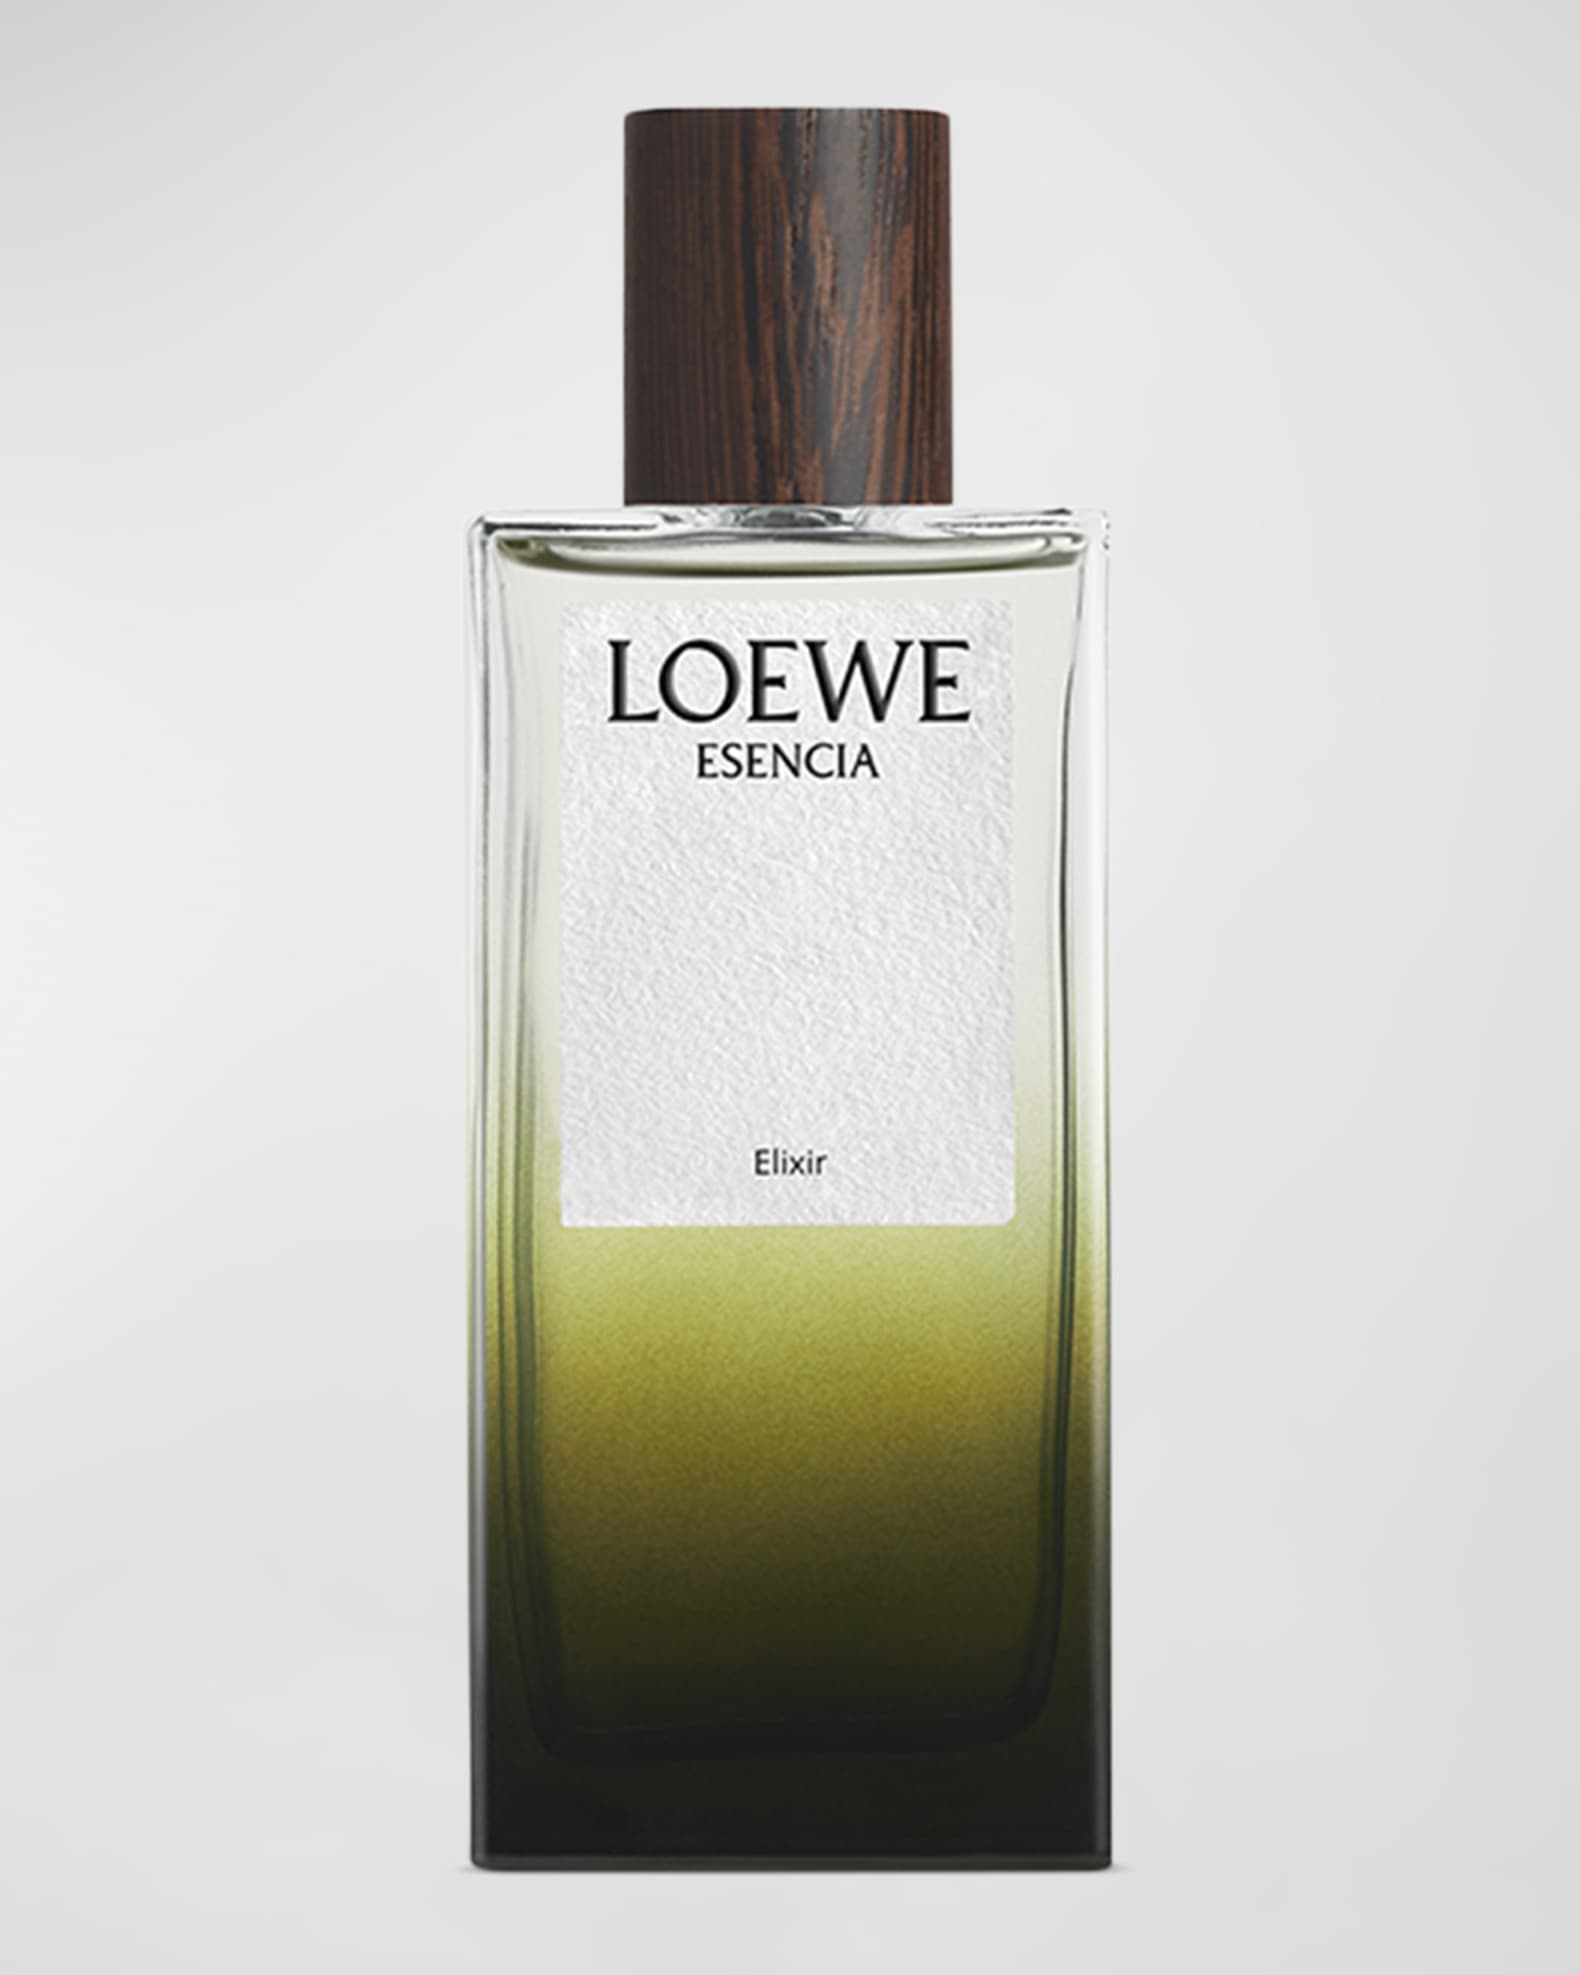 Loewe » Parfums, Infos und Rezensionen